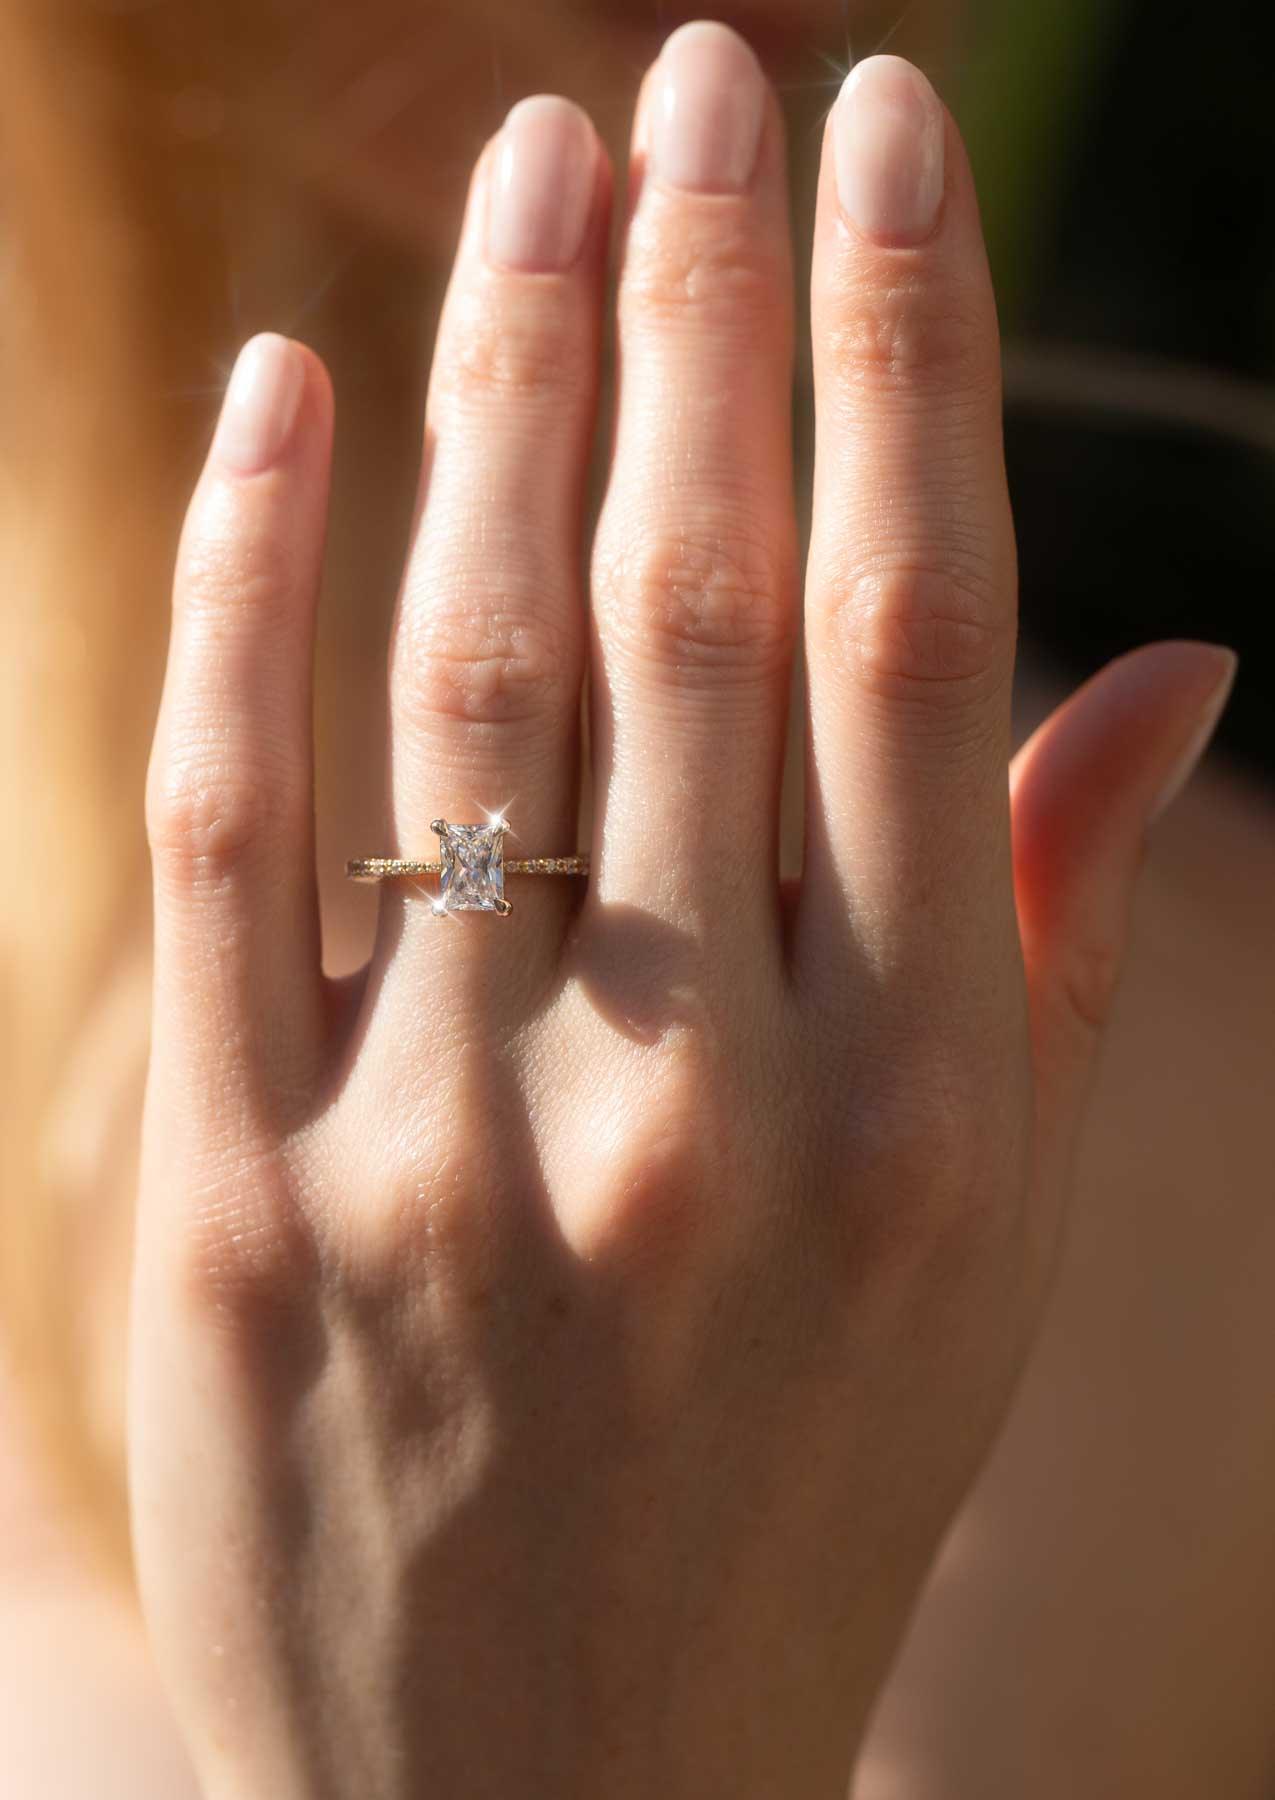 The Celine White Gold Cultured Diamond Ring